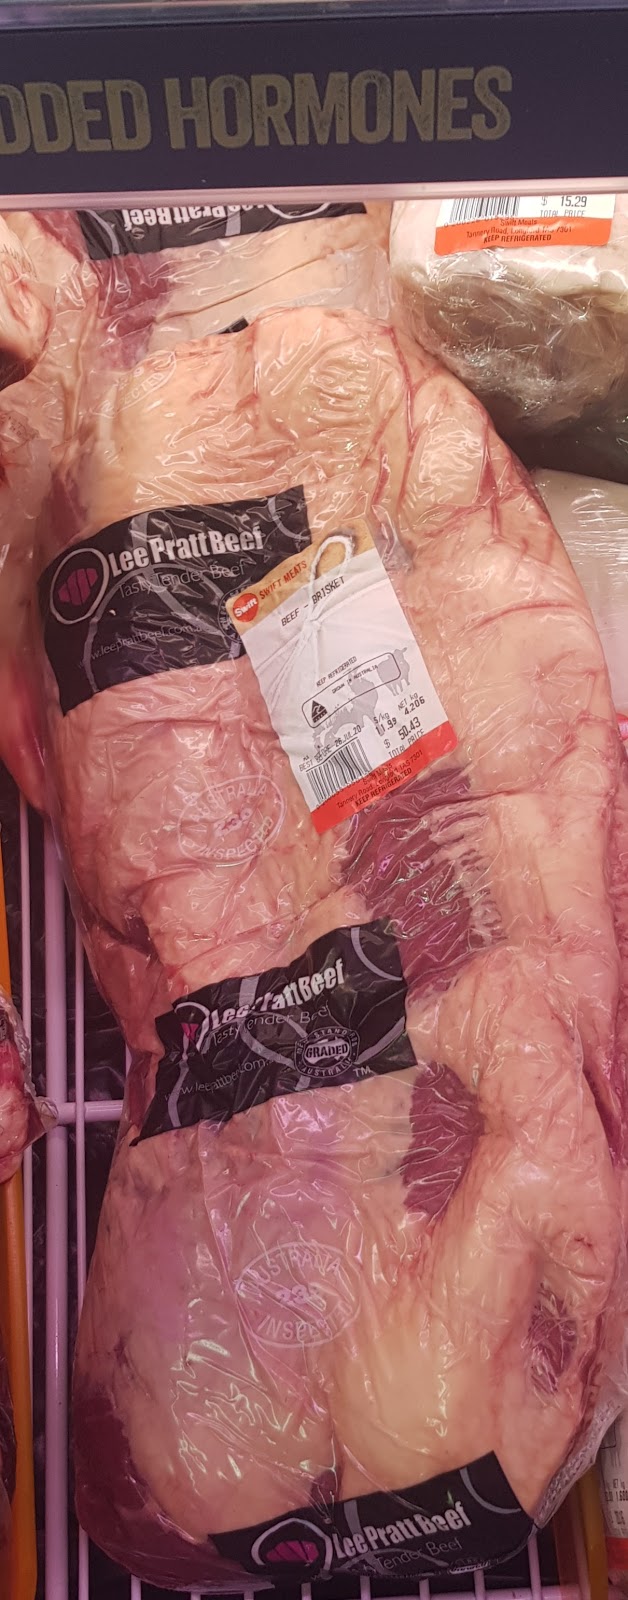 Swift Meats | Tannery Rd S, Longford TAS 7301, Australia | Phone: (03) 6391 1767